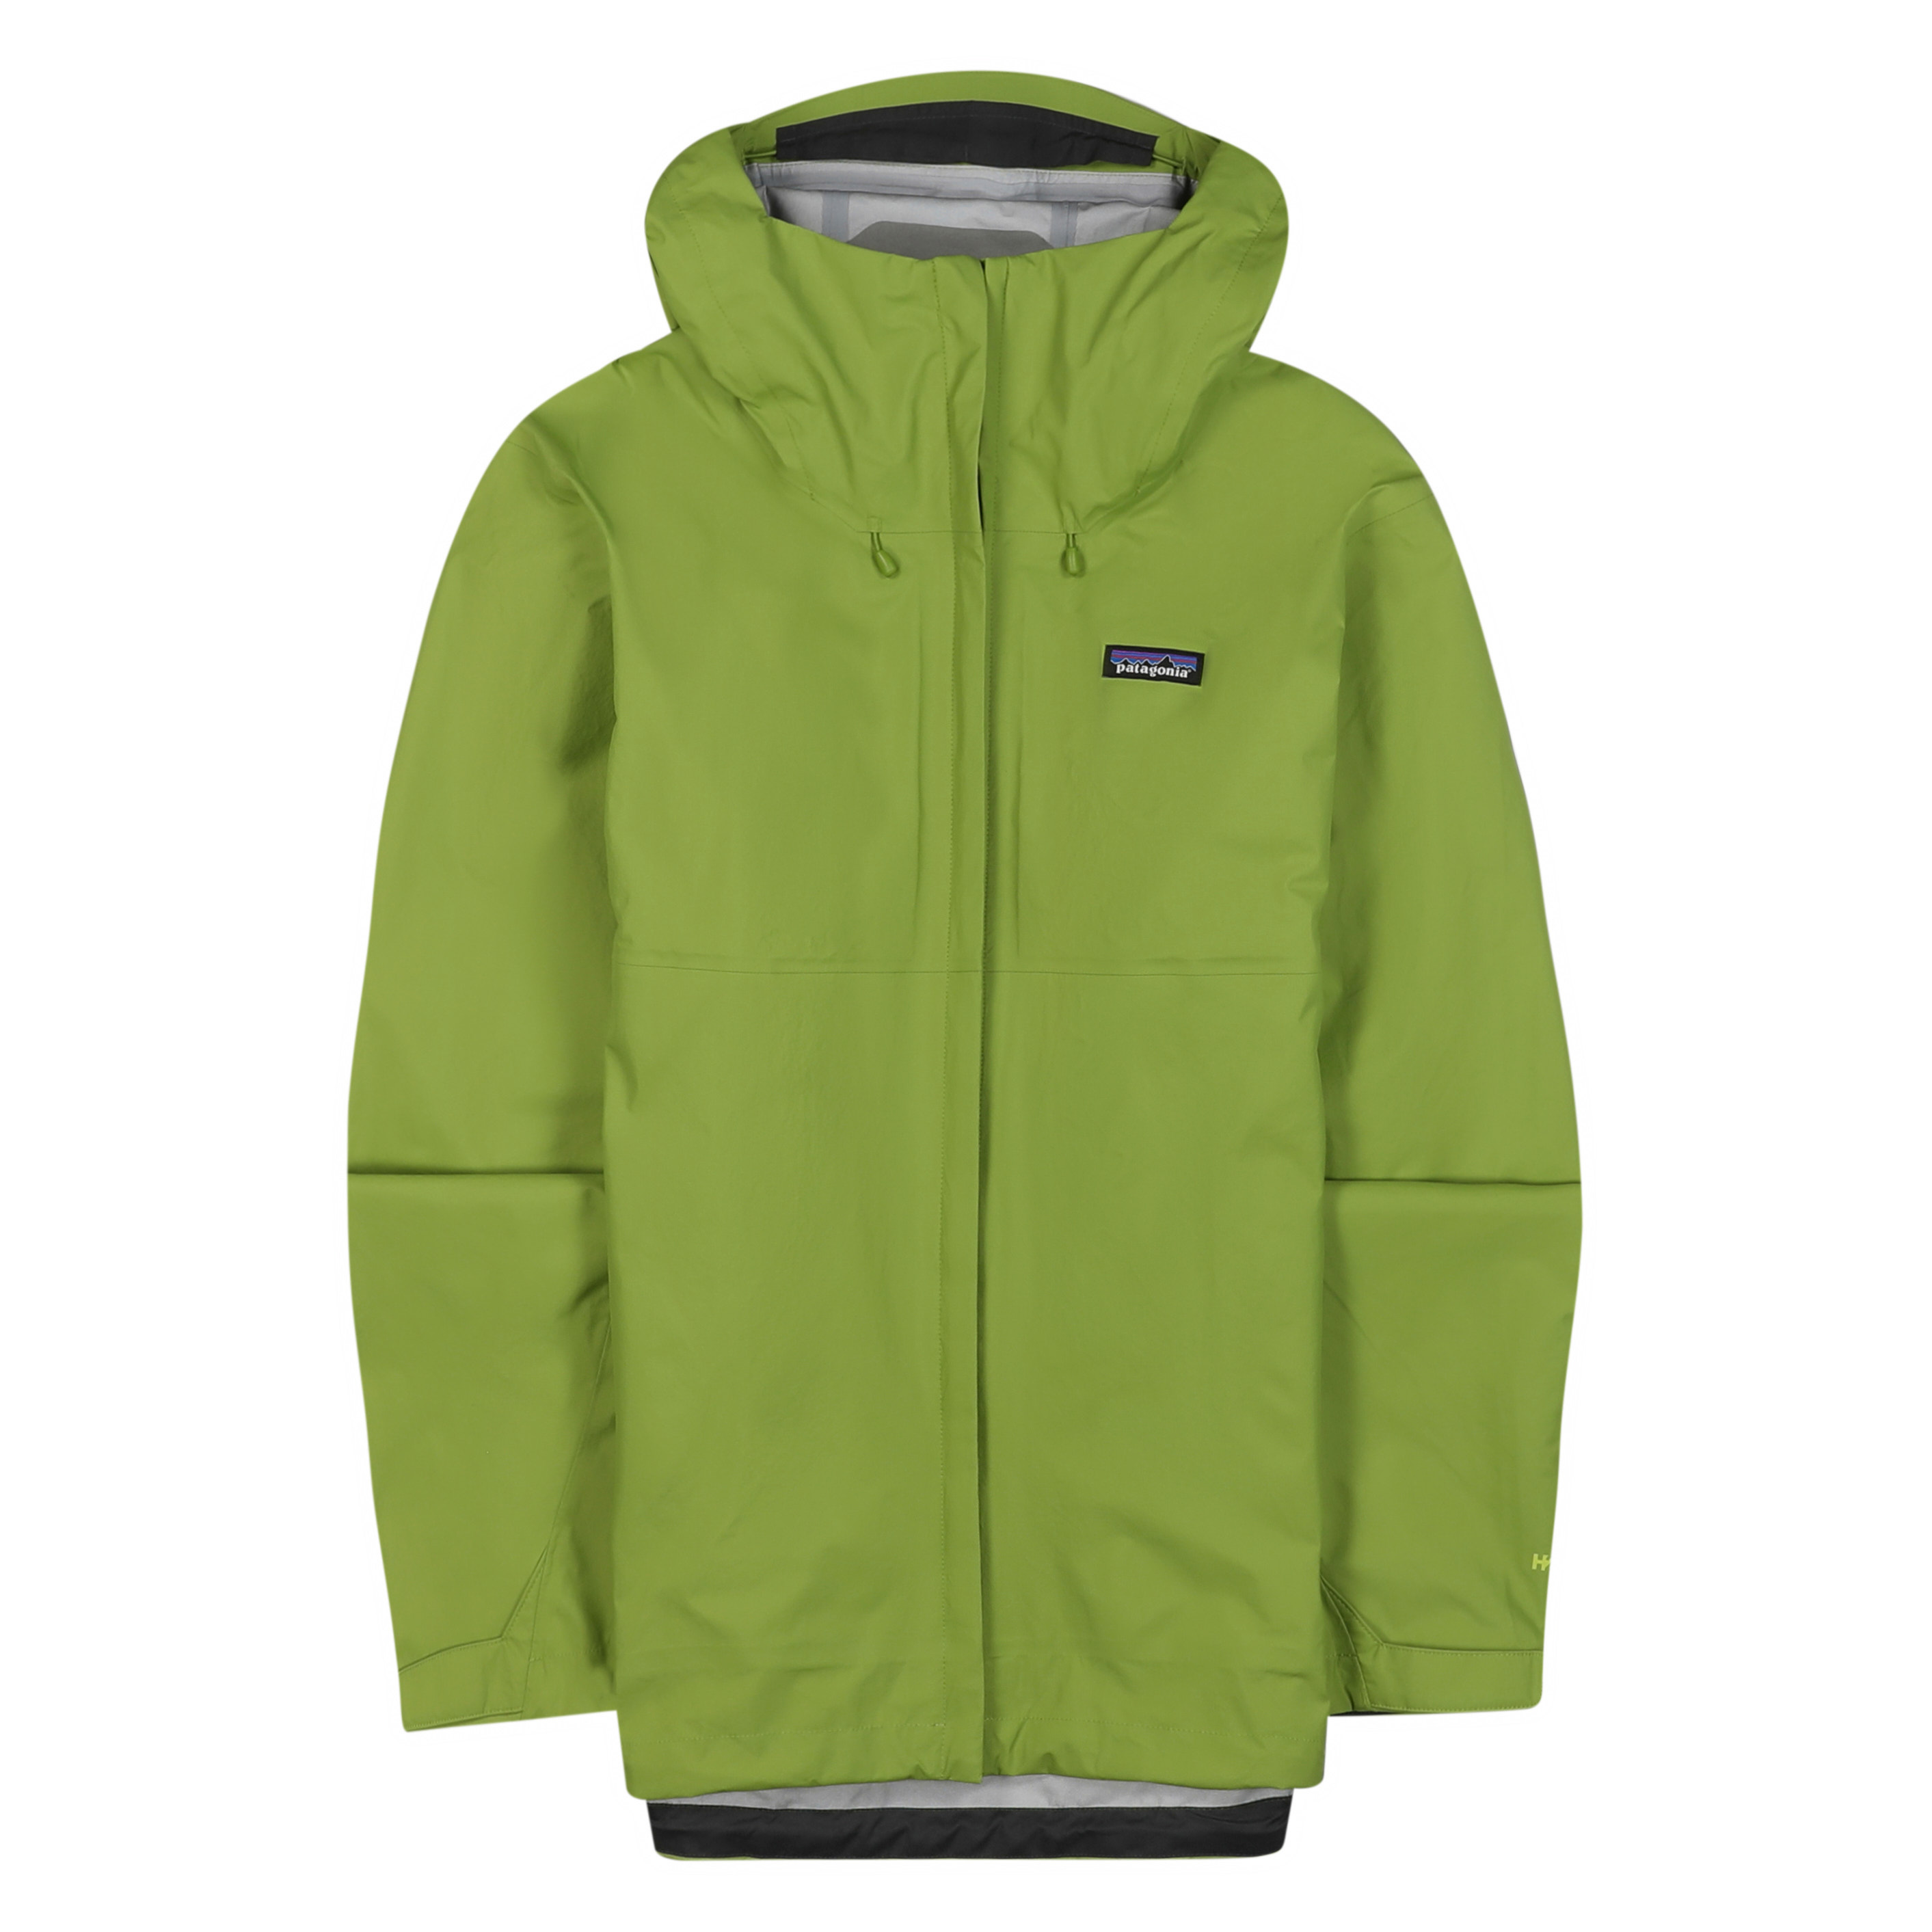 Patagonia Worn Wear Men's Torrentshell 3L Jacket Supply Green - Used